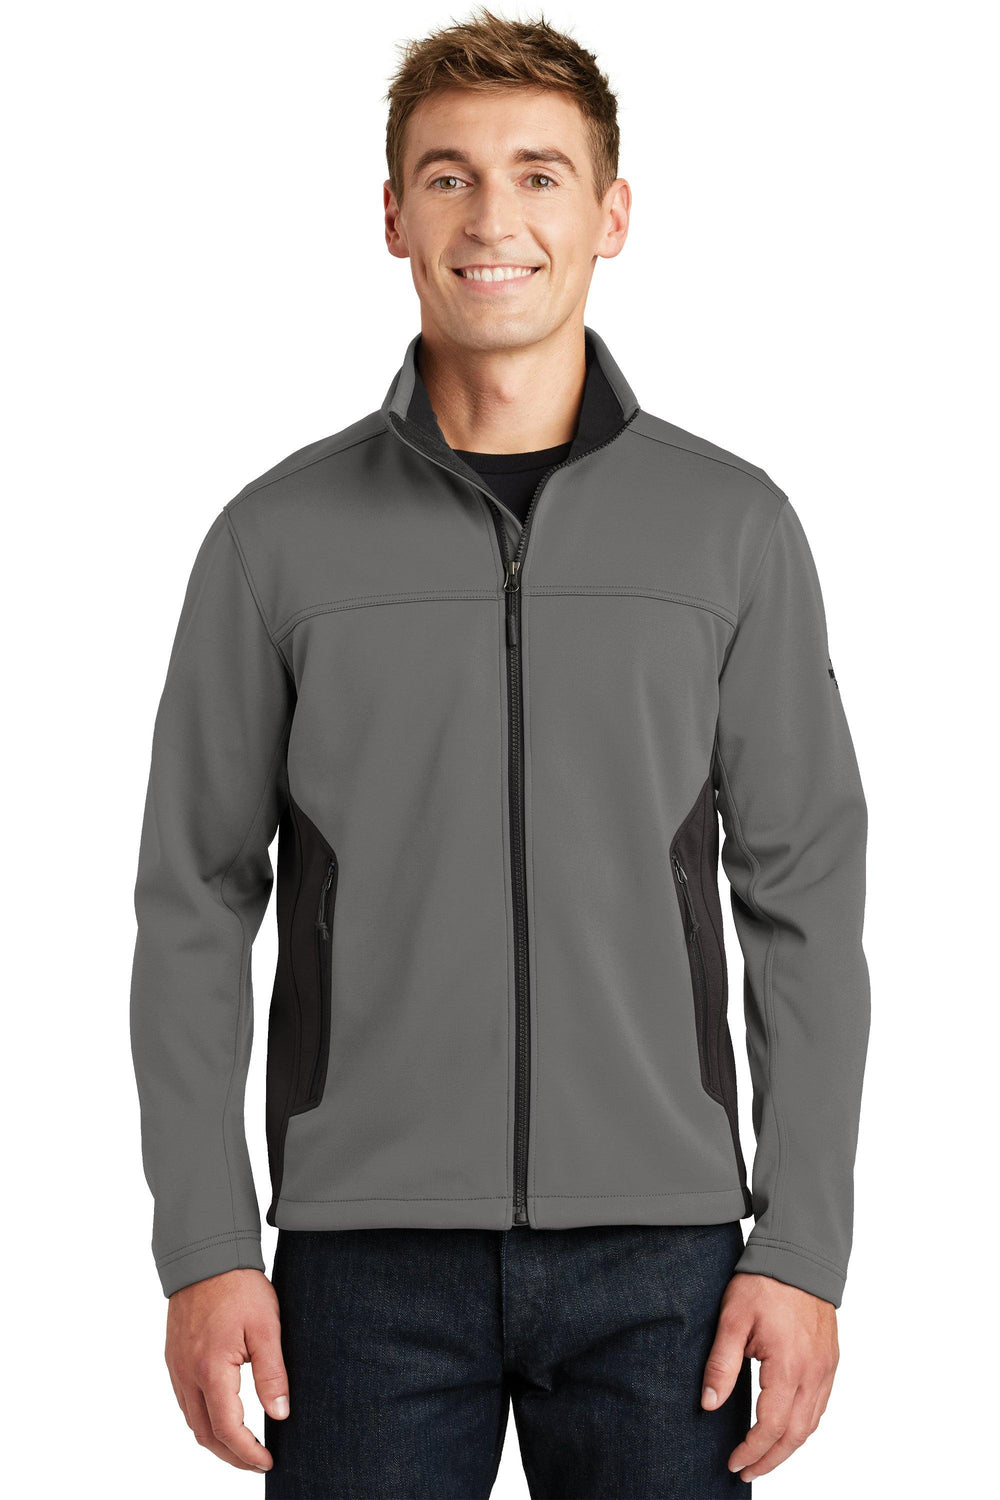 Soft Shell Jacket, KW-SMNF0A3LGX North Face® Men's Ridgeline Soft Shell Jacket